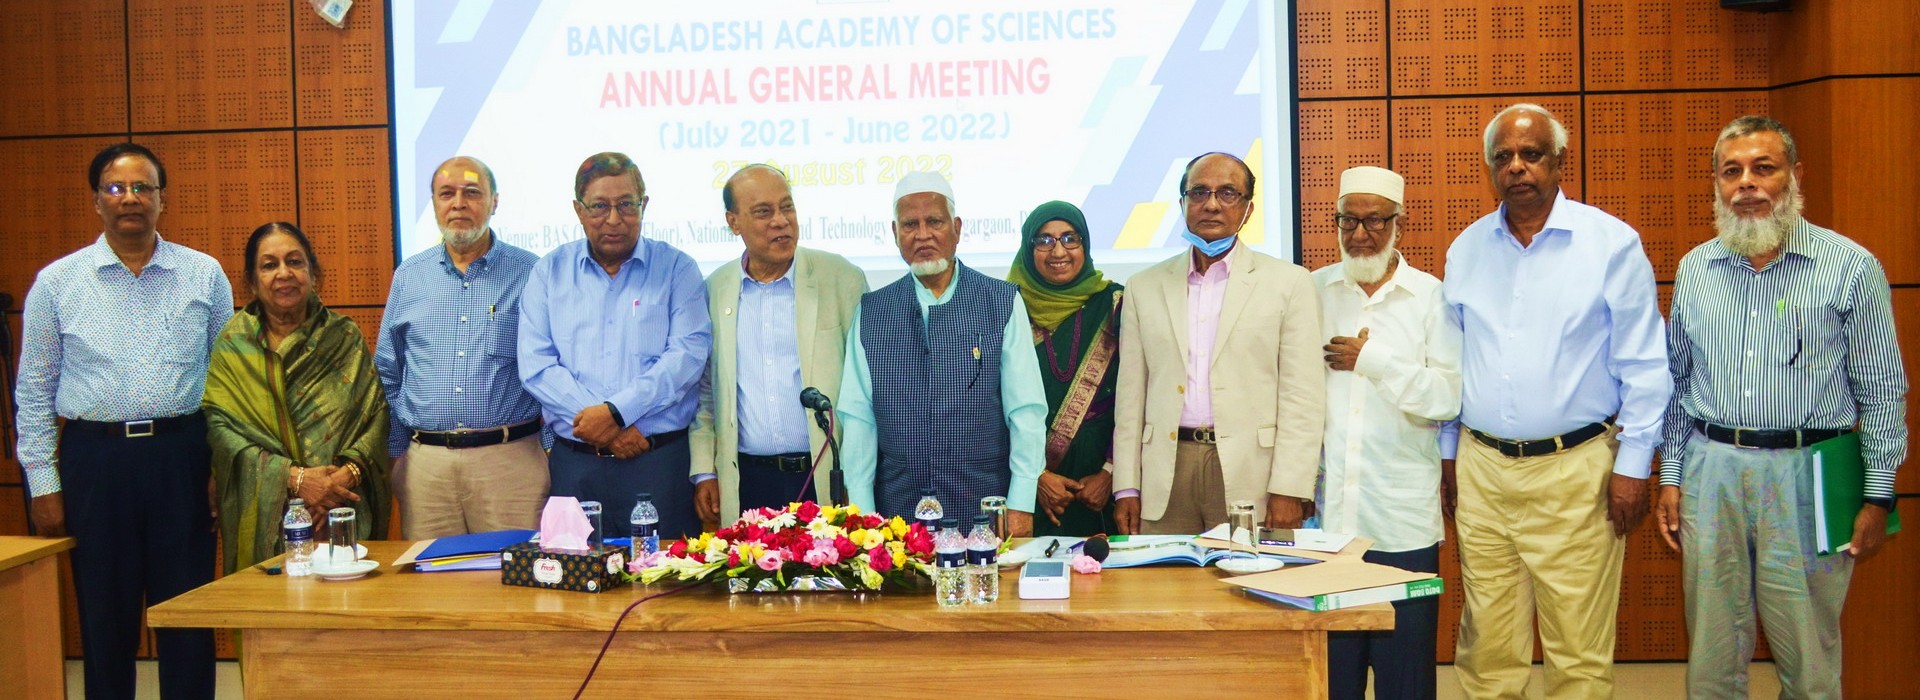 The AGM of Bangladesh Academy of Sciences held on August 27, 2022 endorsed its new Council (July 2022-June 2025)President, Emeritus Prof. Dr. AK Azad Chowdhury; Vice Presidents, Prof. Dr. Zahurul Karim, Prof. Dr. Choudhury Mahmood Hasan; Treasurer, Prof. Dr. Mesbahuddin Ahmed; Secretary, Prof. Dr. Haseena Khan; Associate Secretary, Prof. Dr. Yearul Kabir; Members: Dr. M. Idris Ali, Prof. Dr. Z N Tahmida Begum, Prof. Dr. Shariff Enamul Kabir, Prof. Dr. Liaquat Ali, Maj. Gen. Prof. Dr. ASM Matiur, Rahman, Prof. Dr. Md. Abdur Rashid